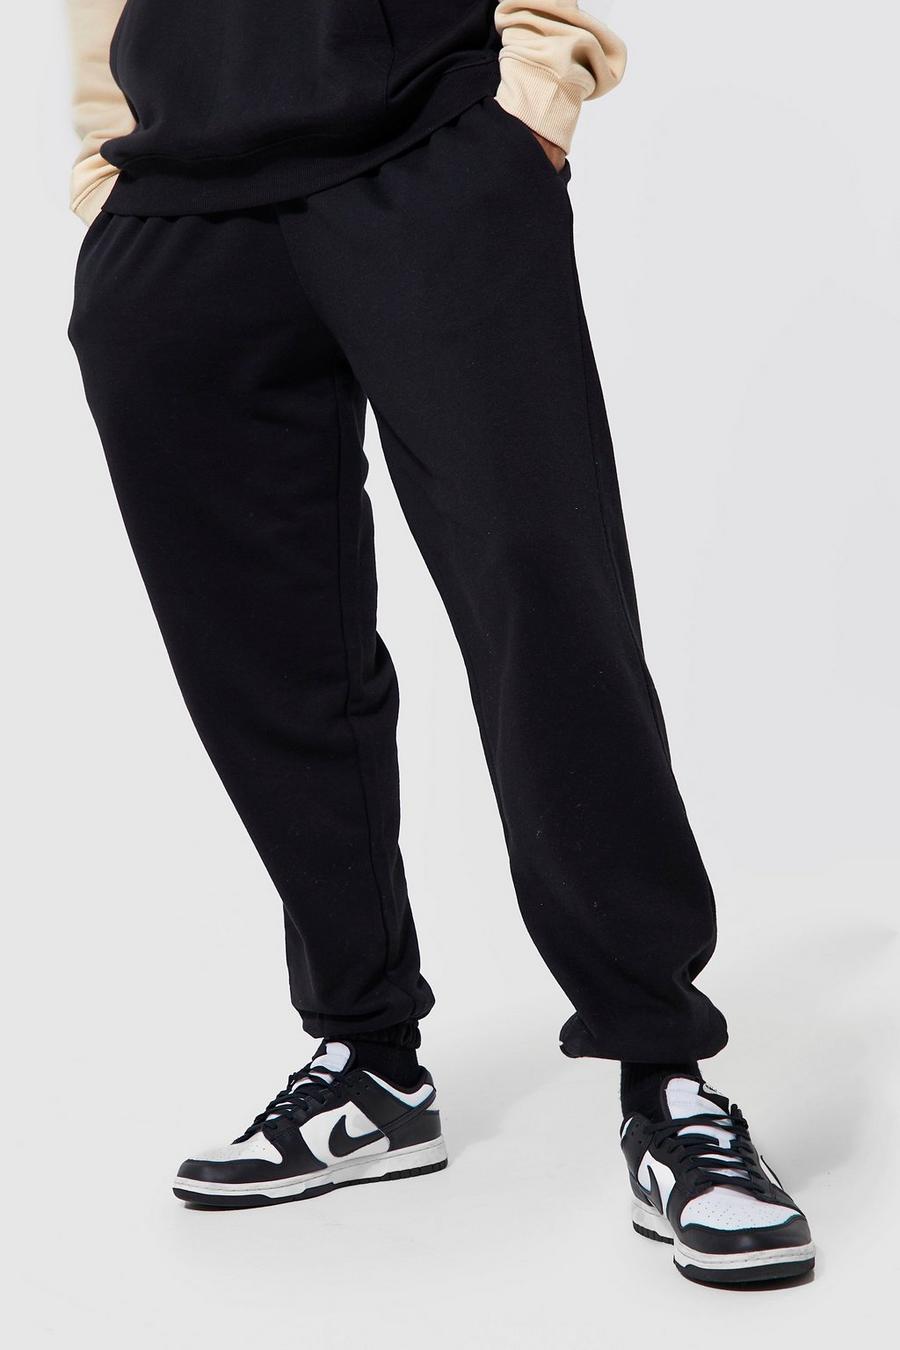 Pantaloni tuta Tall Basic comodi in cotone REEL, Black nero